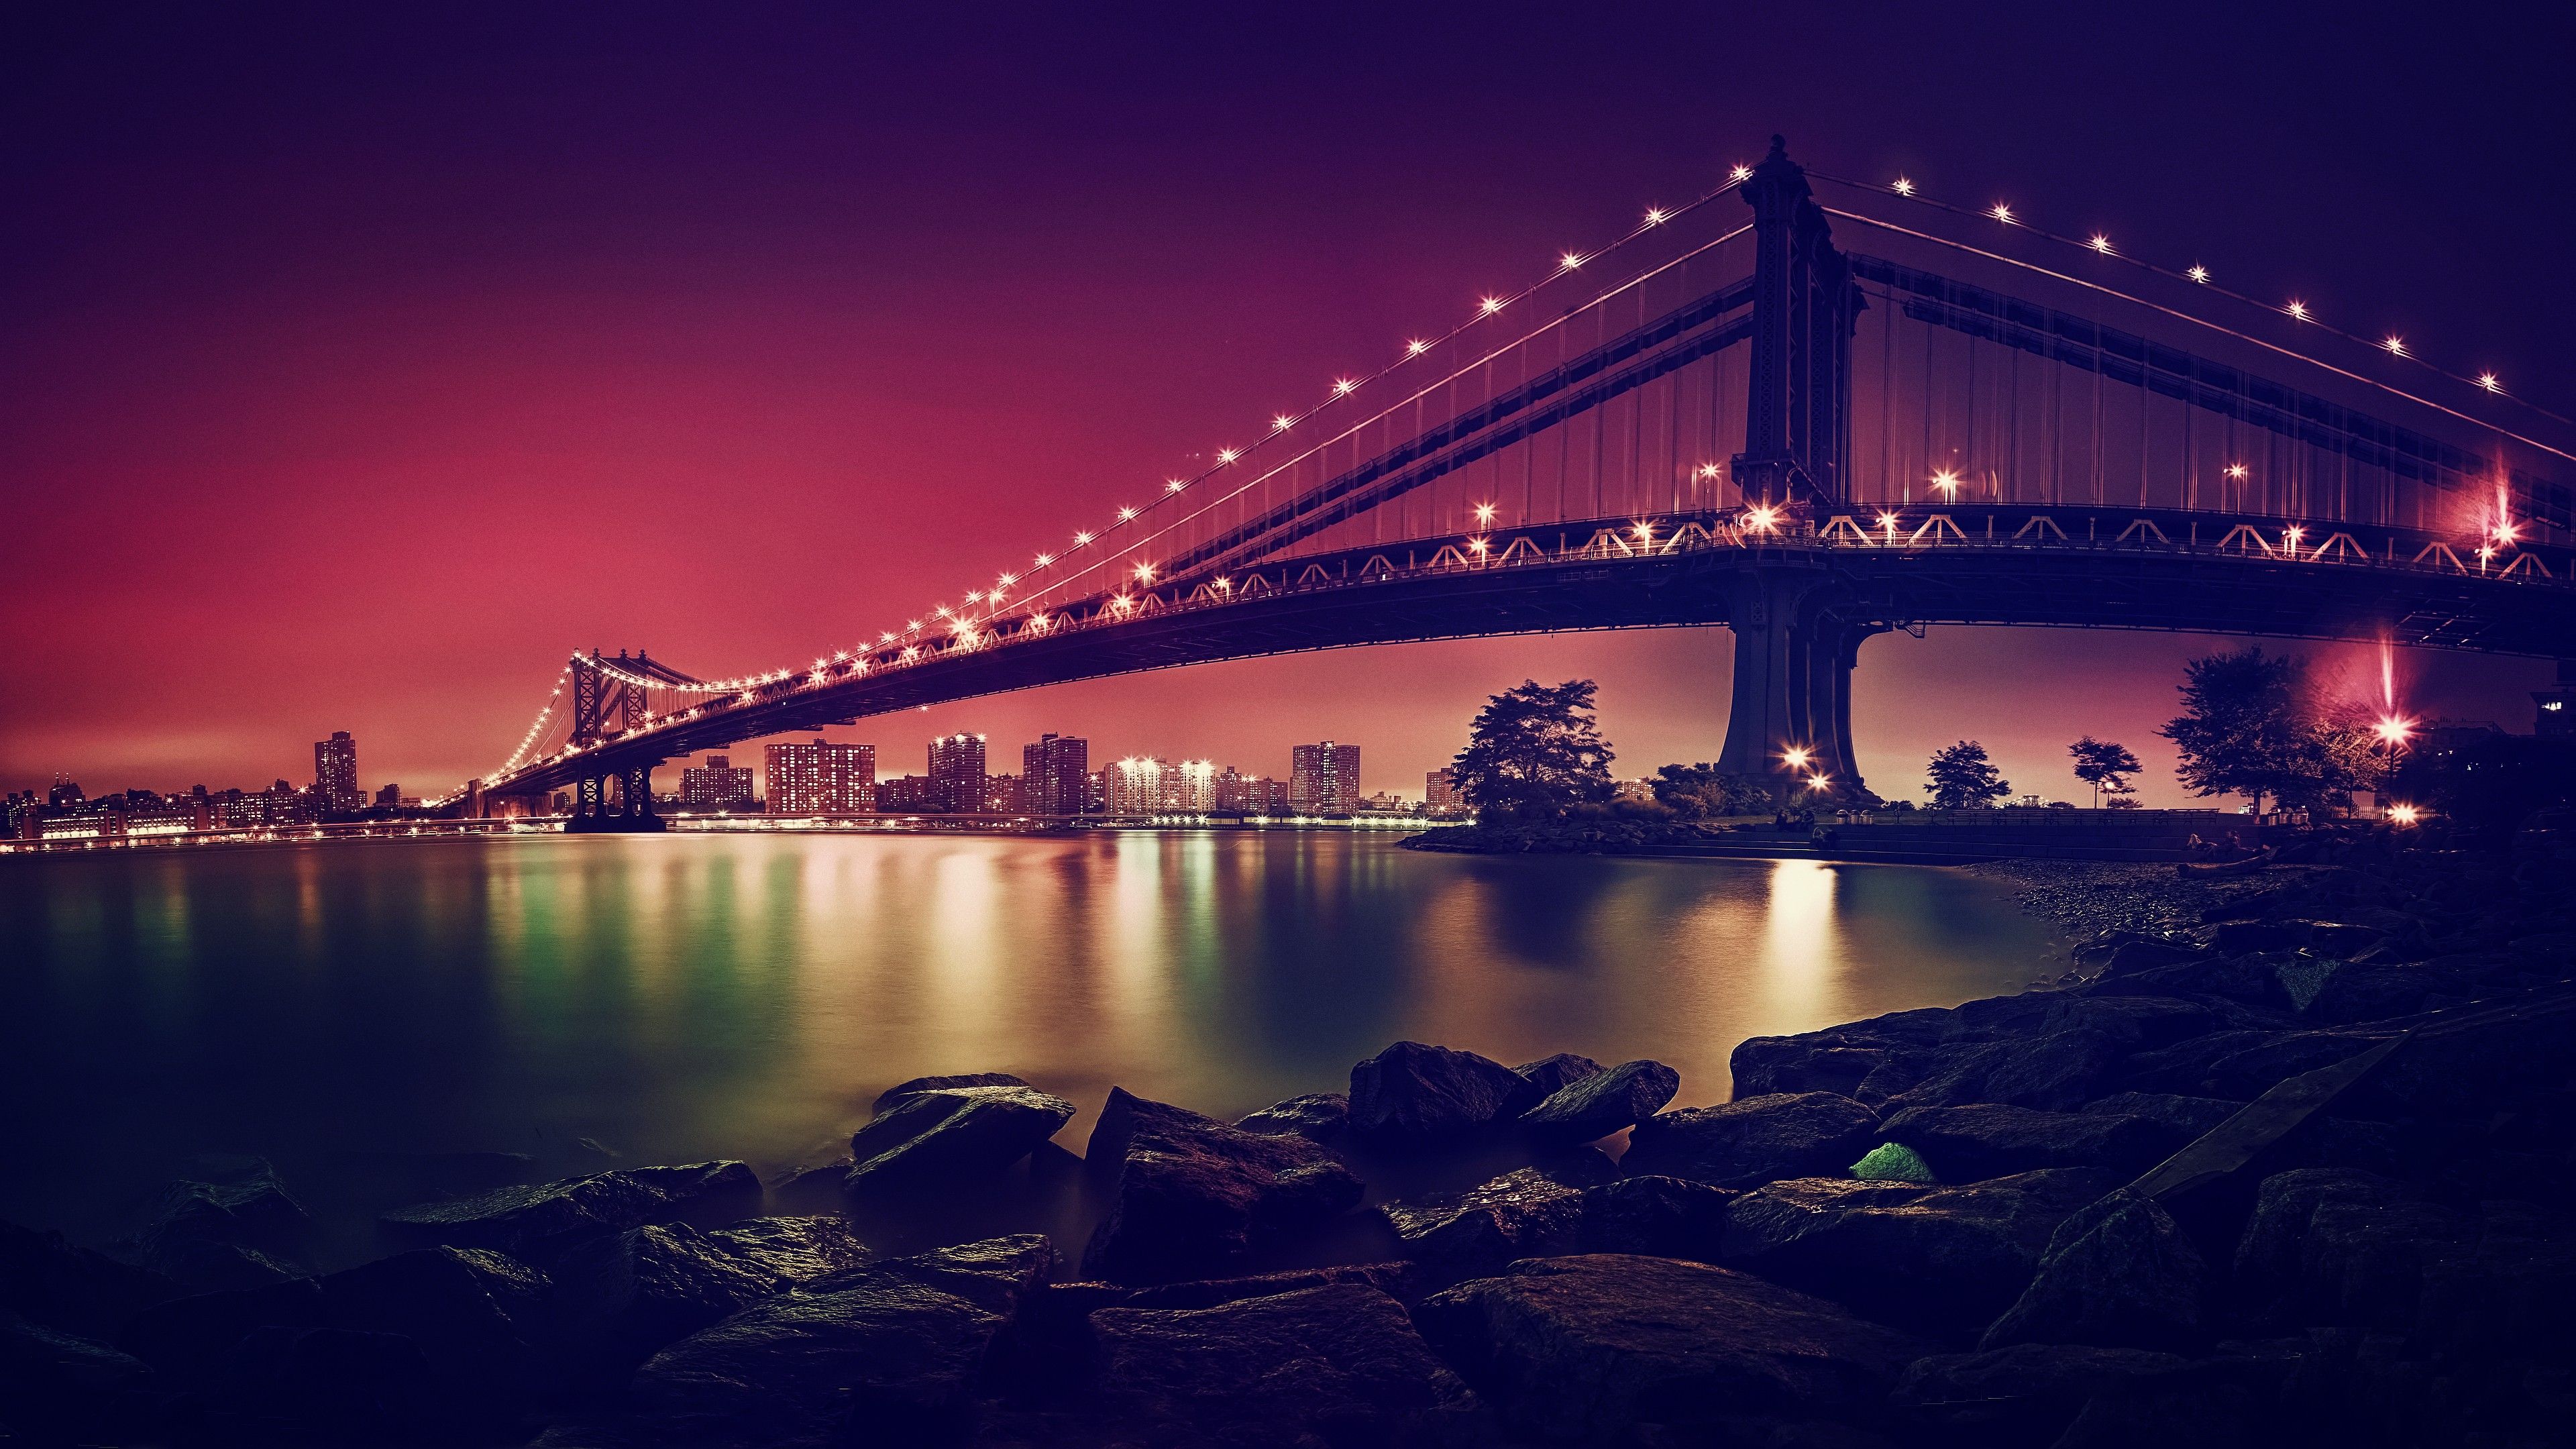 Manhattan Bridge 4k, HD World, 4k Wallpaper, Image, Background, Photo and Picture